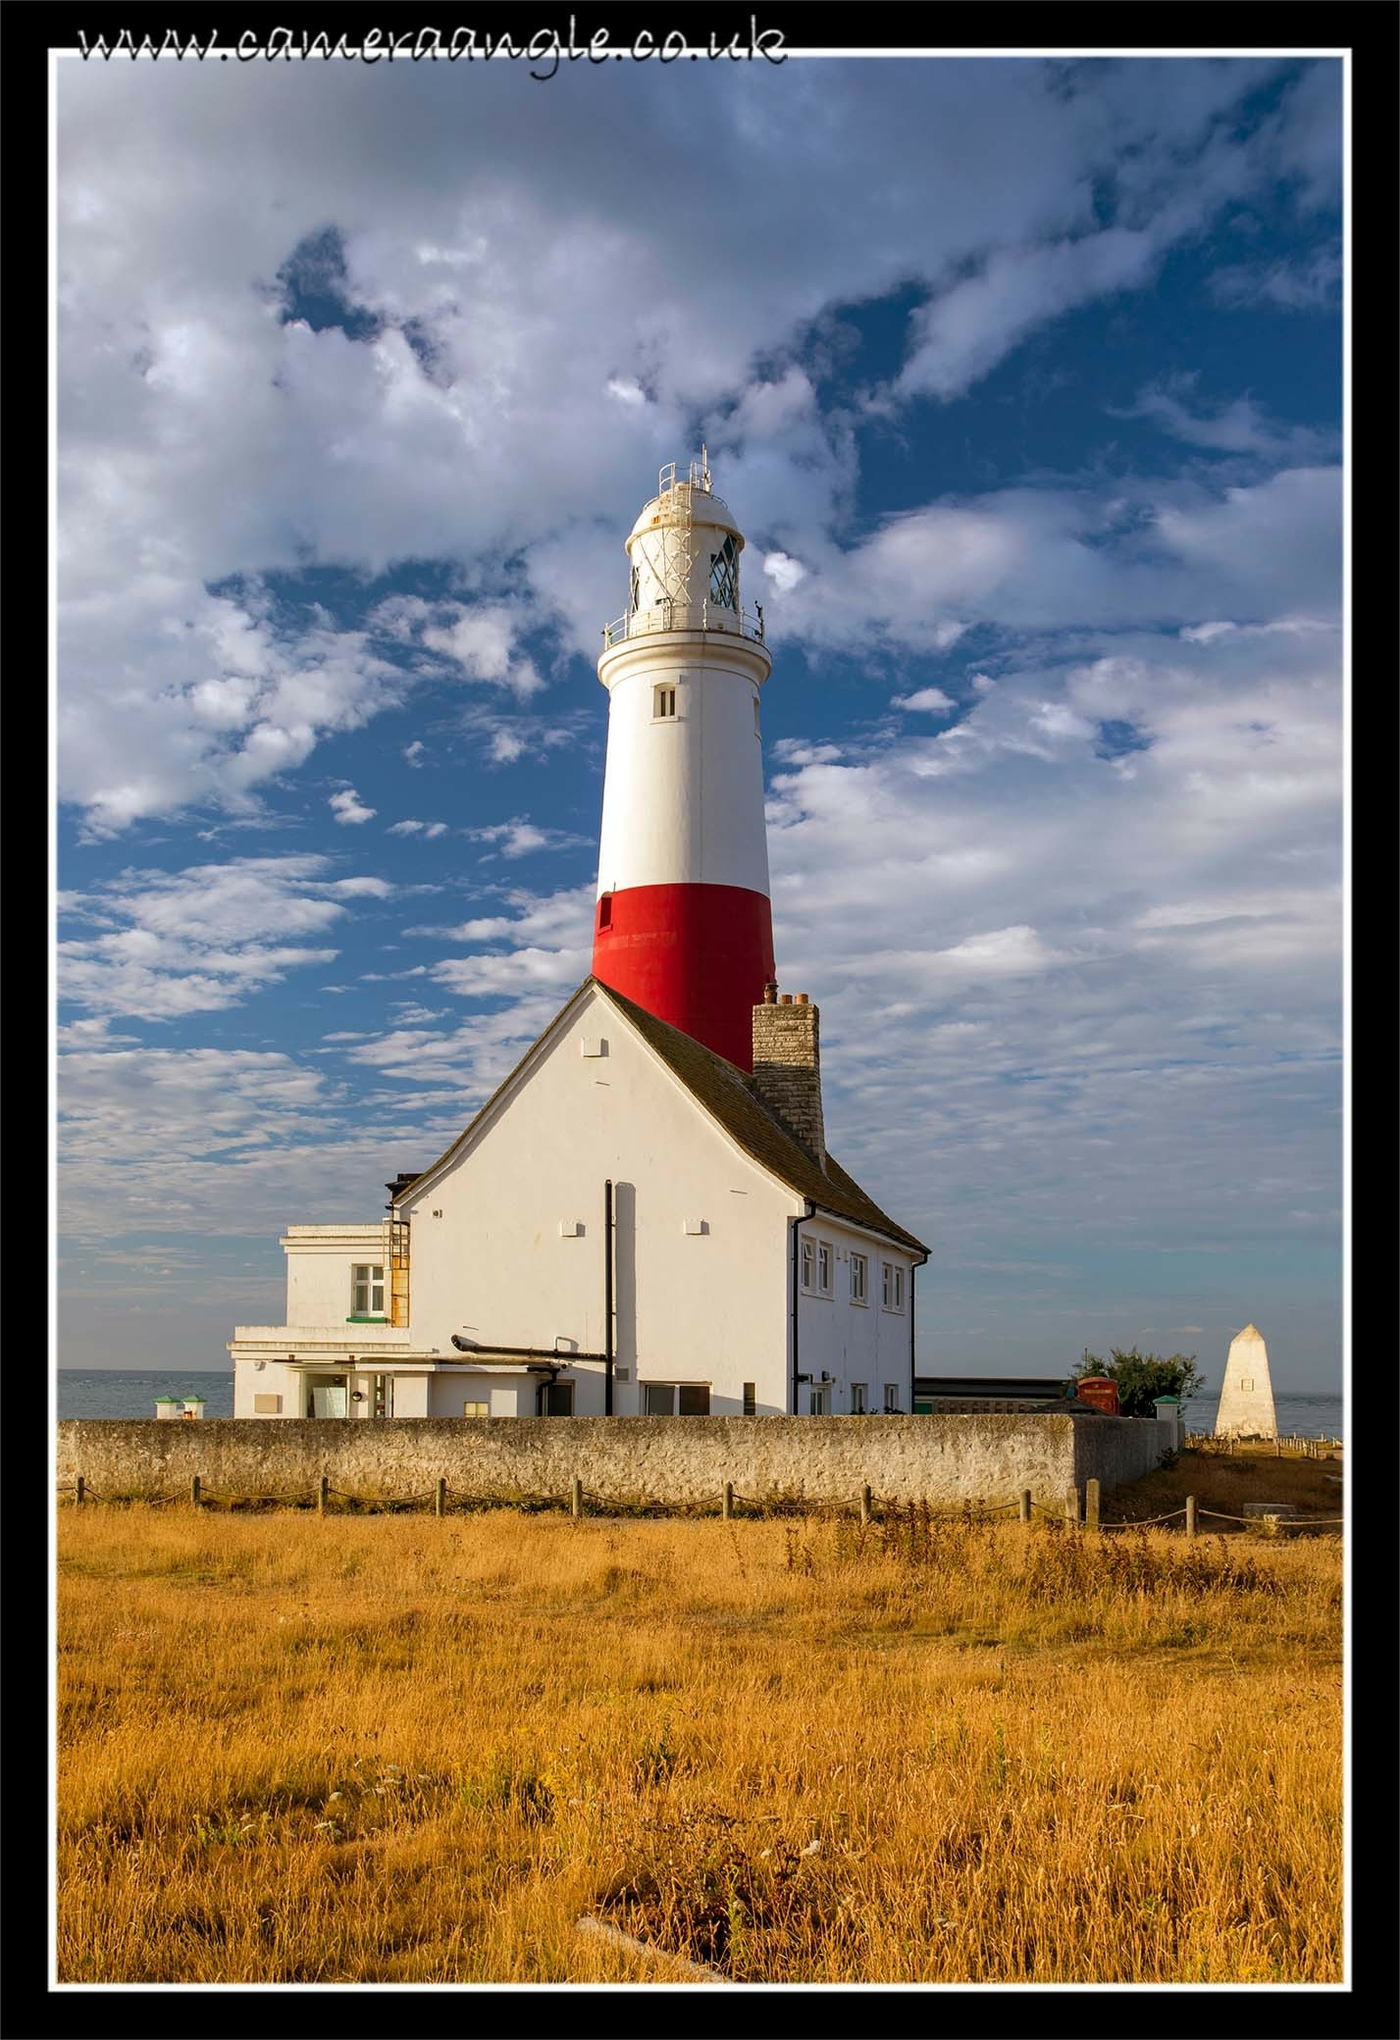 PortlandLIghtHouse
Keywords: Portland Bill Lighthouse